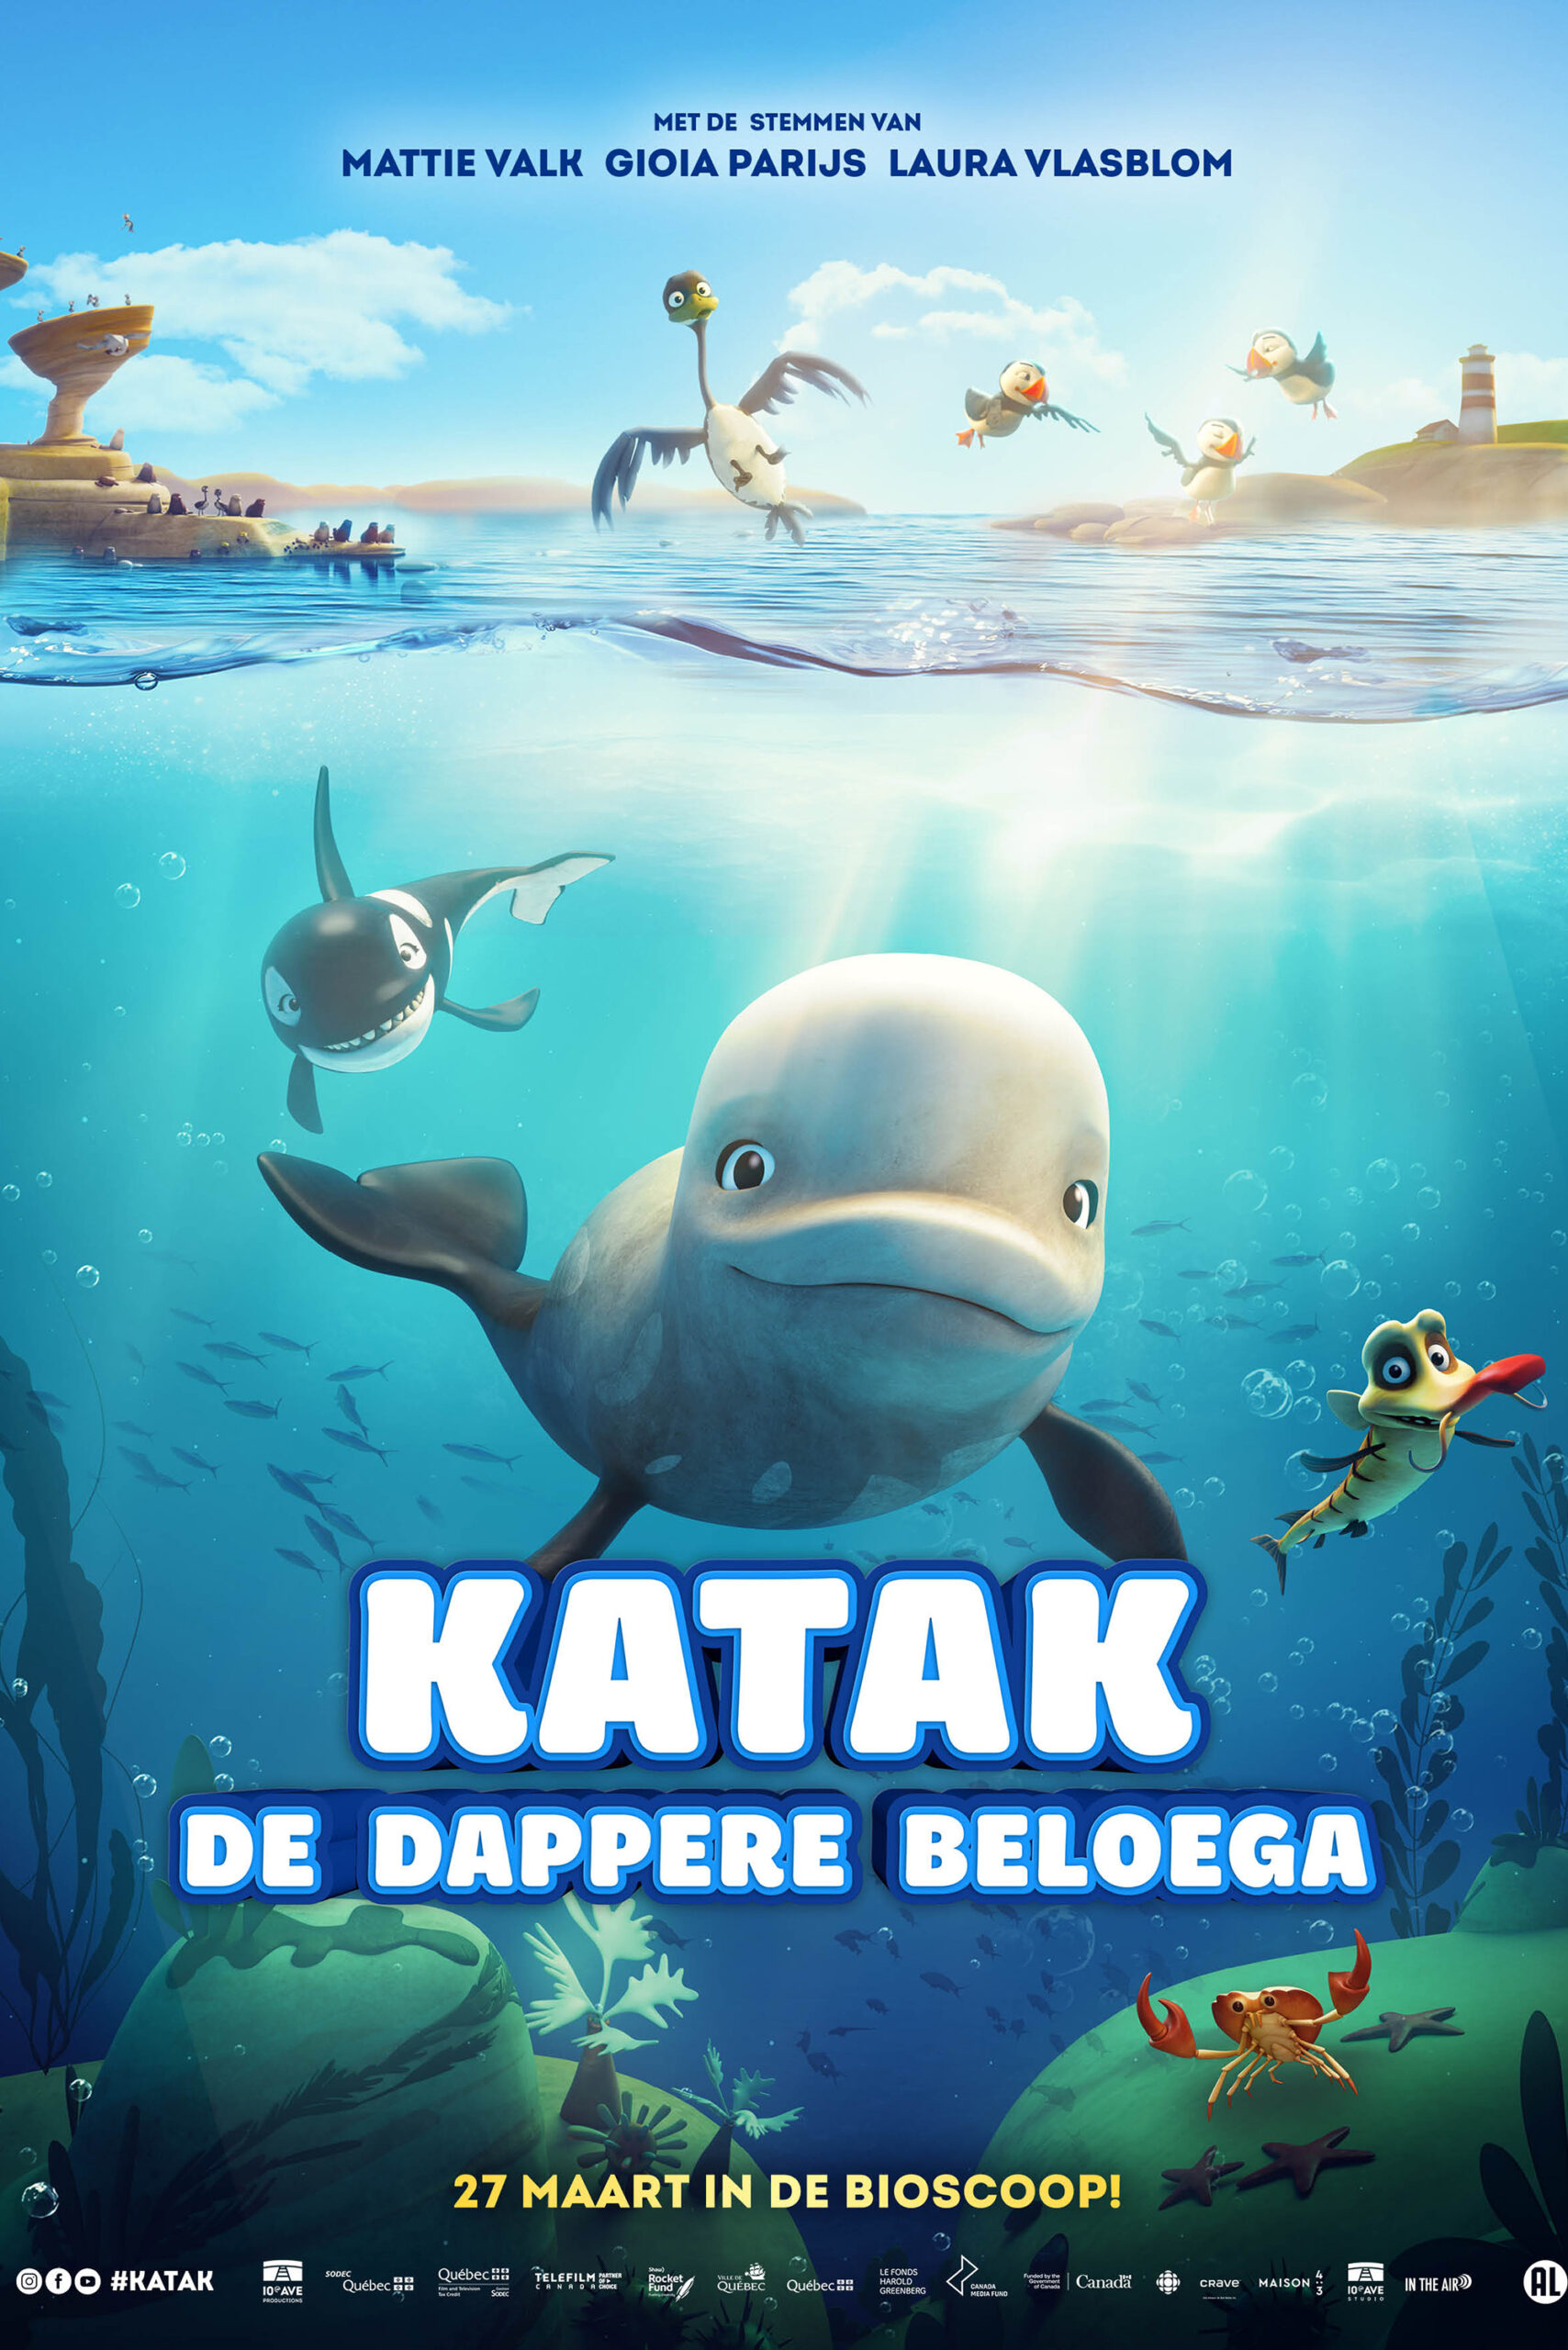 Katak – the brave beluga